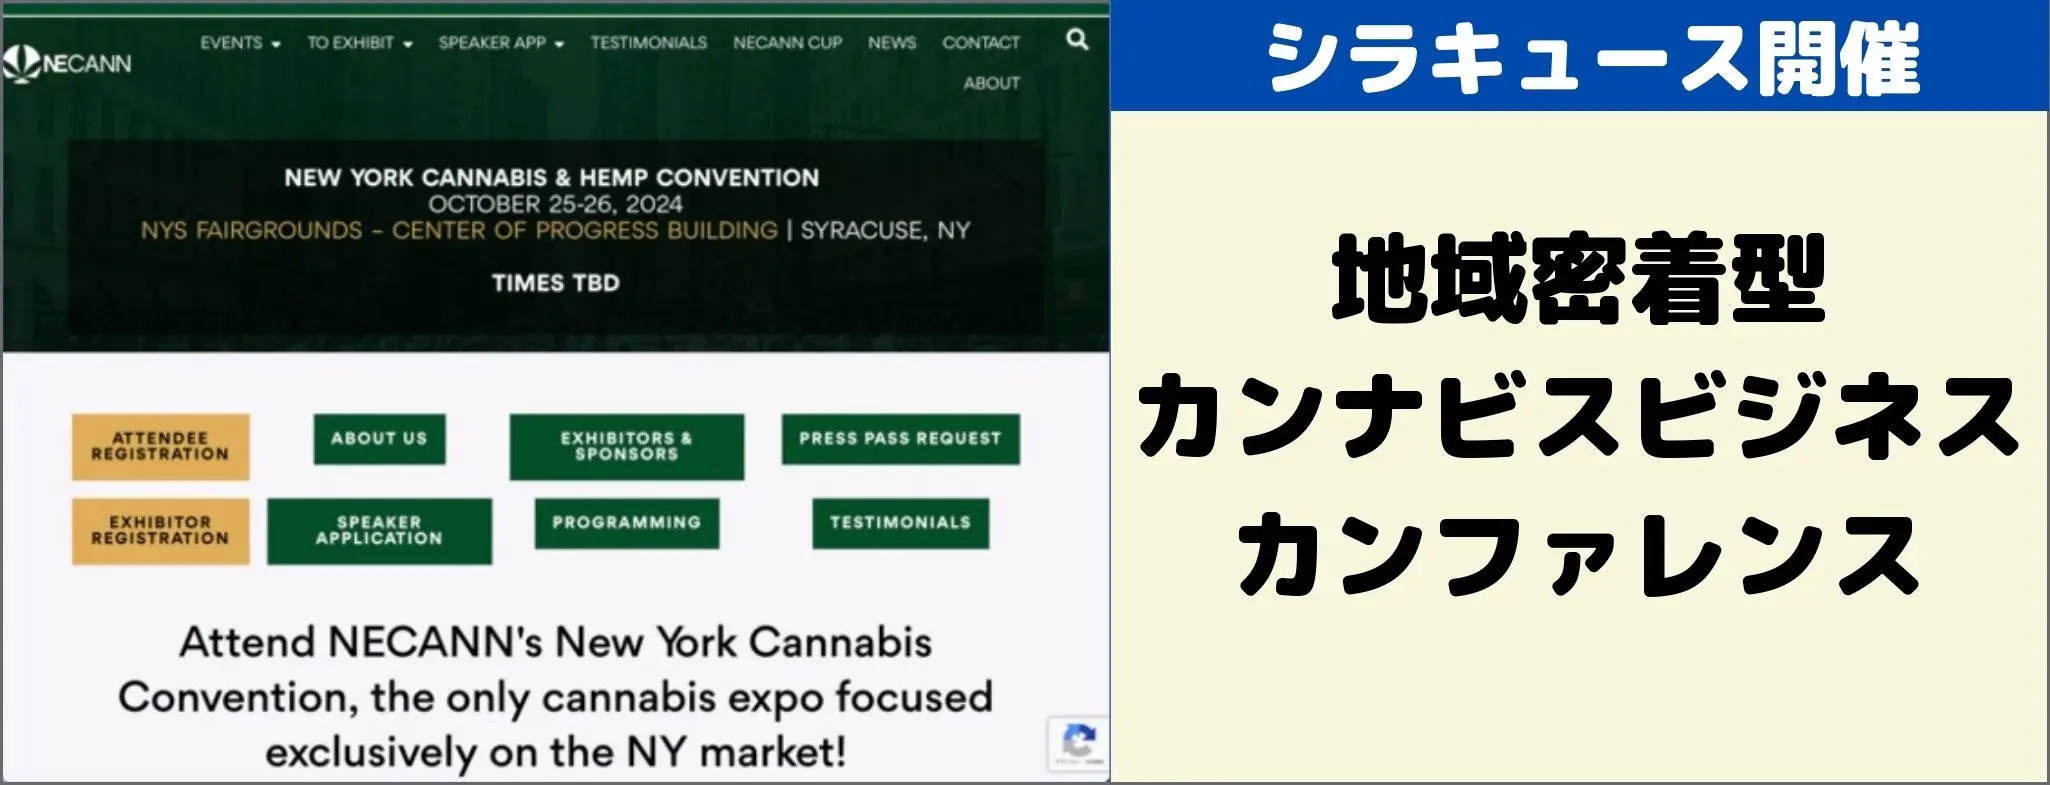 NECANN New York Cannabis & Hemp Convention 2024 イベントグローブ